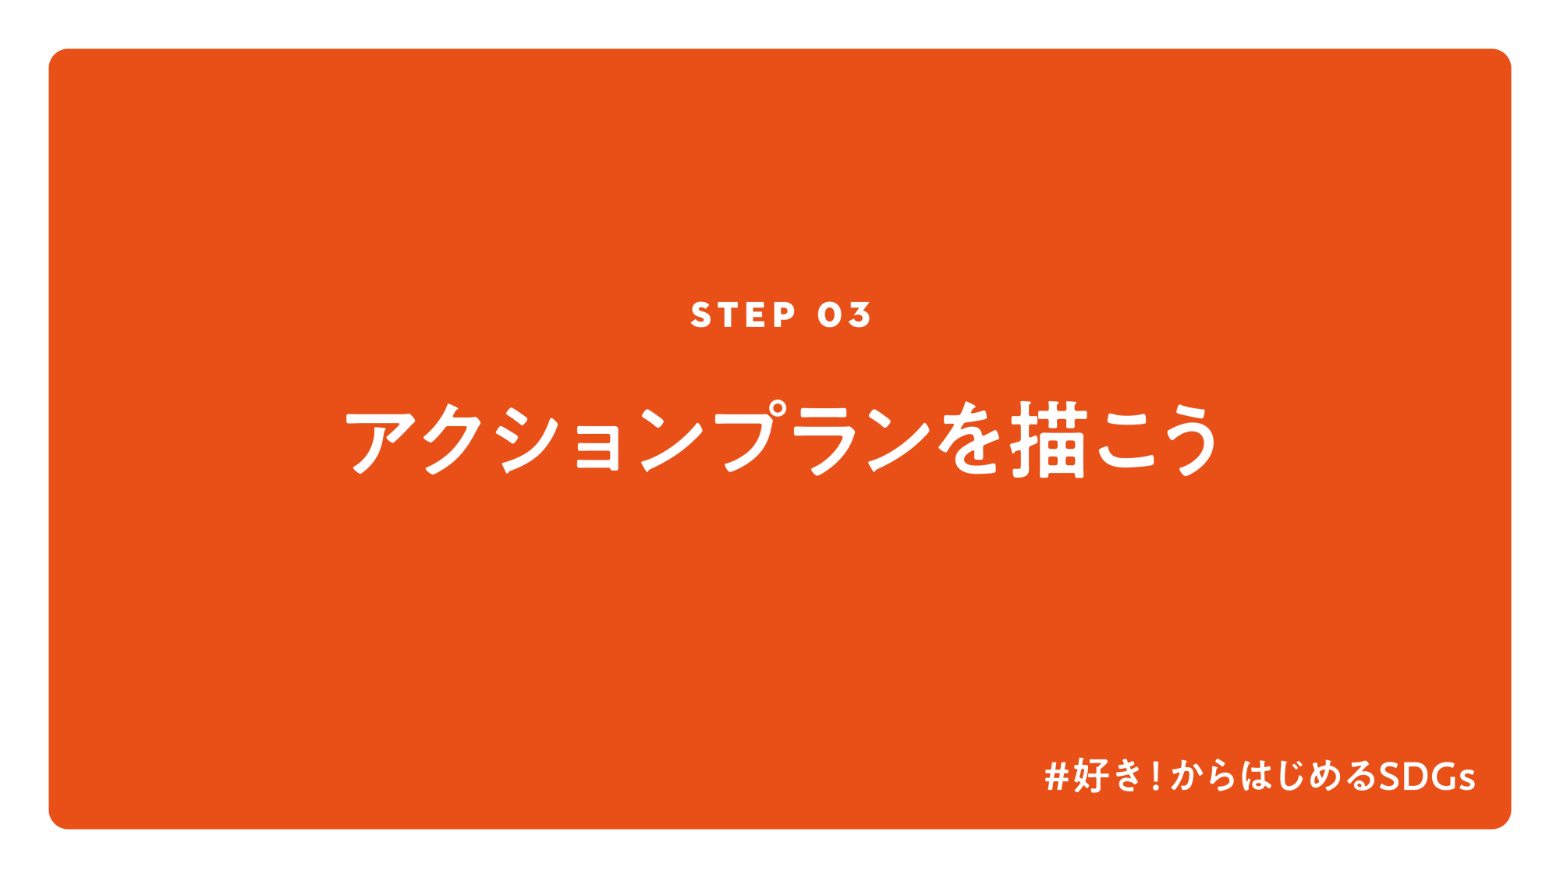 STEP 03 アクションプランを描こう #好き！からはじめるSDGS